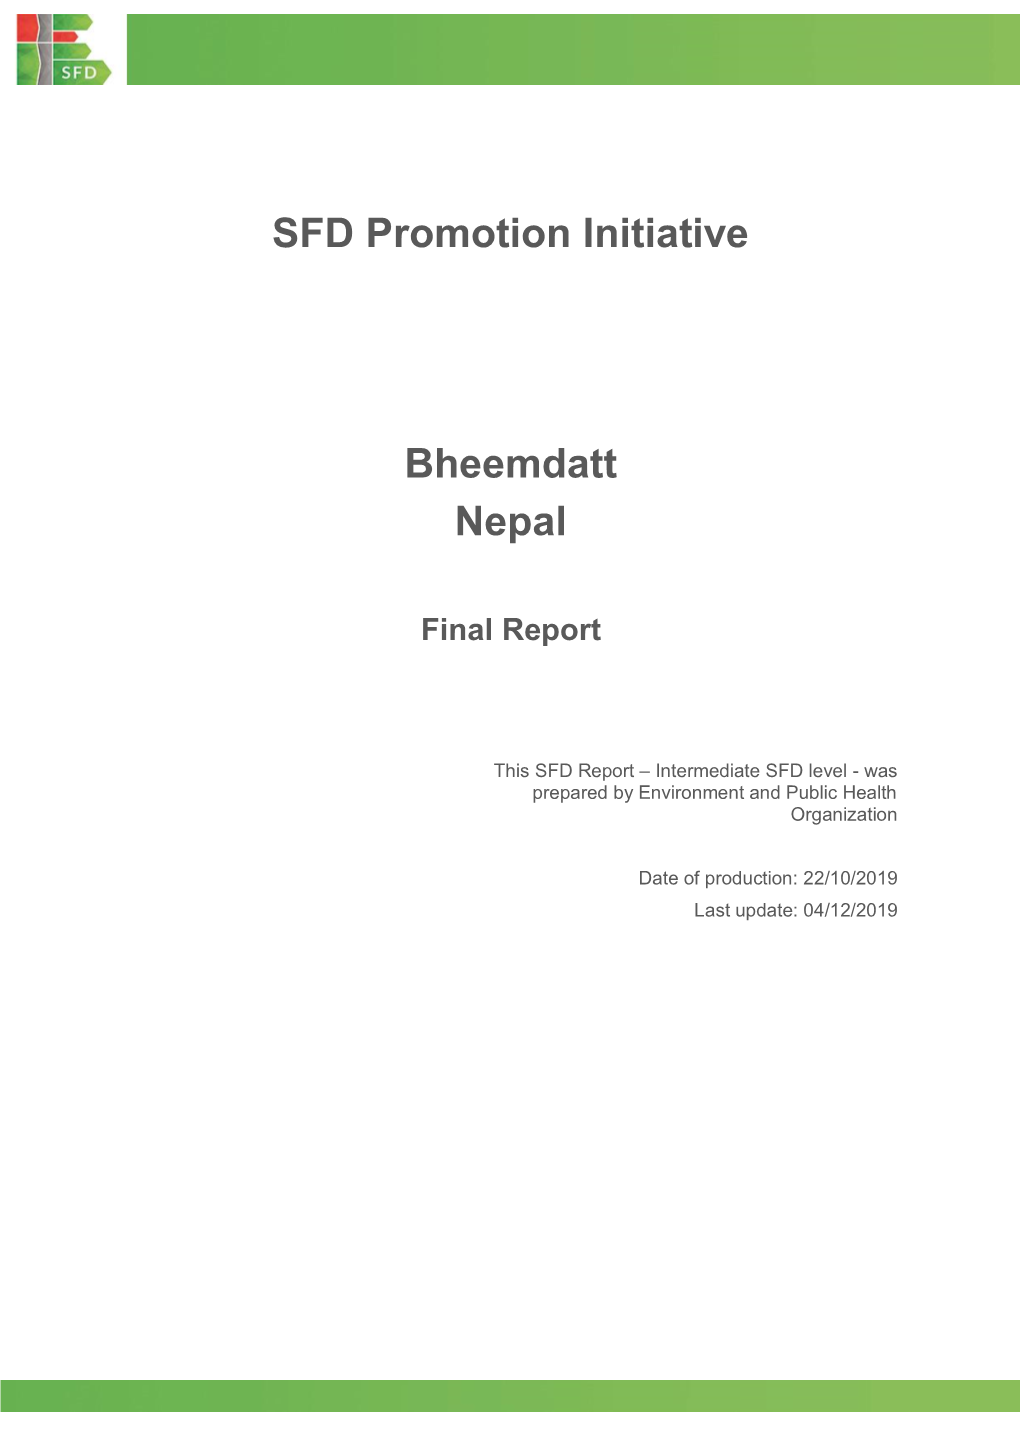 SFD Promotion Initiative Bheemdatt Nepal